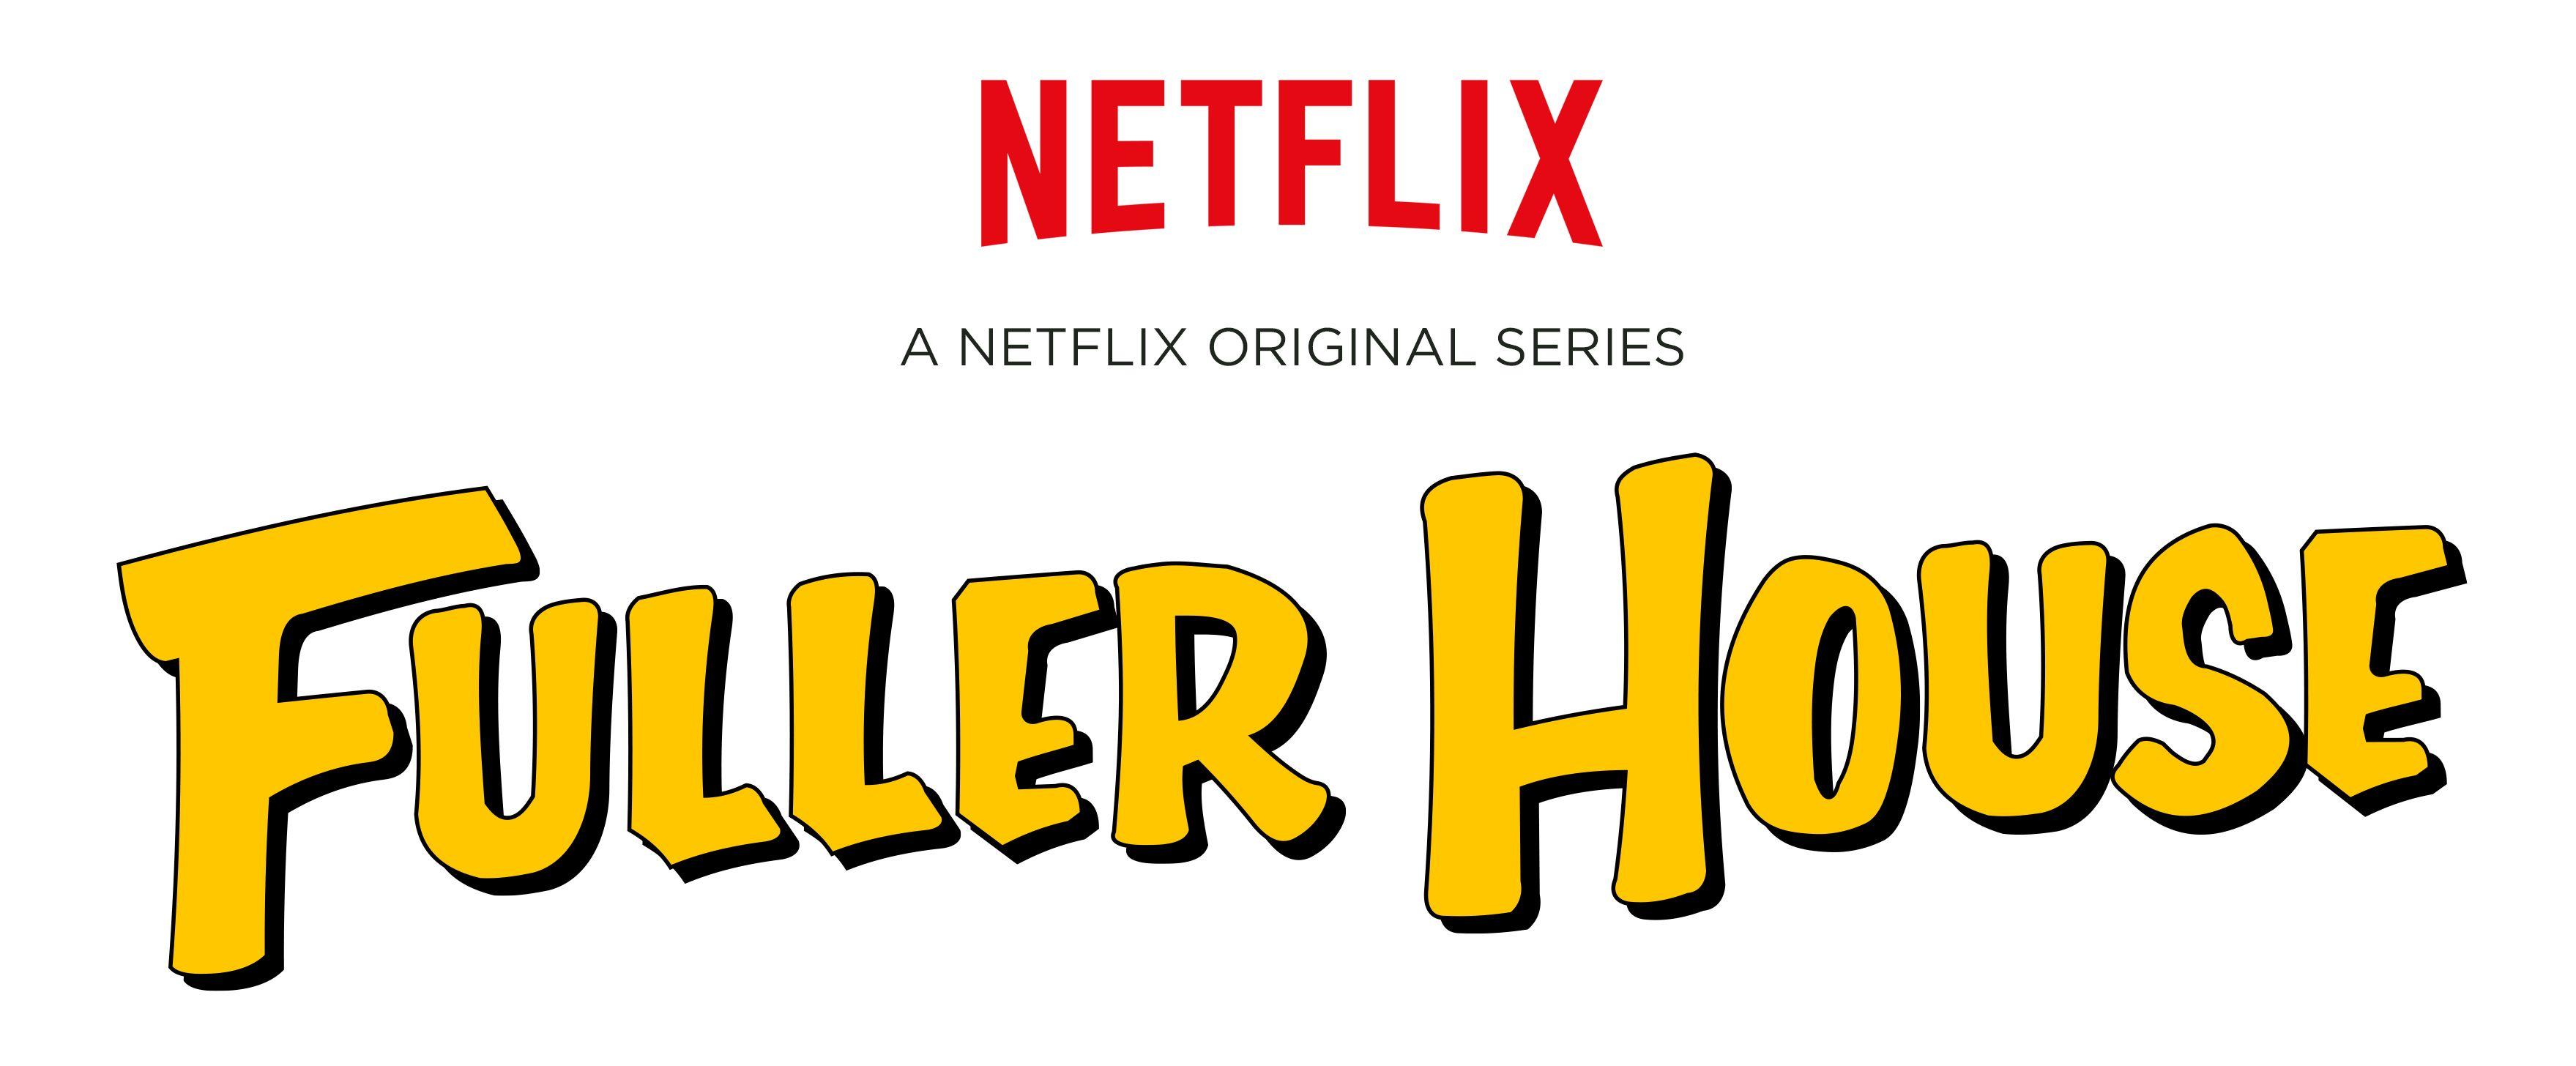 Netflix Series Logo - Fuller House TV Series Logo Revealed by Netflix - Album on Imgur